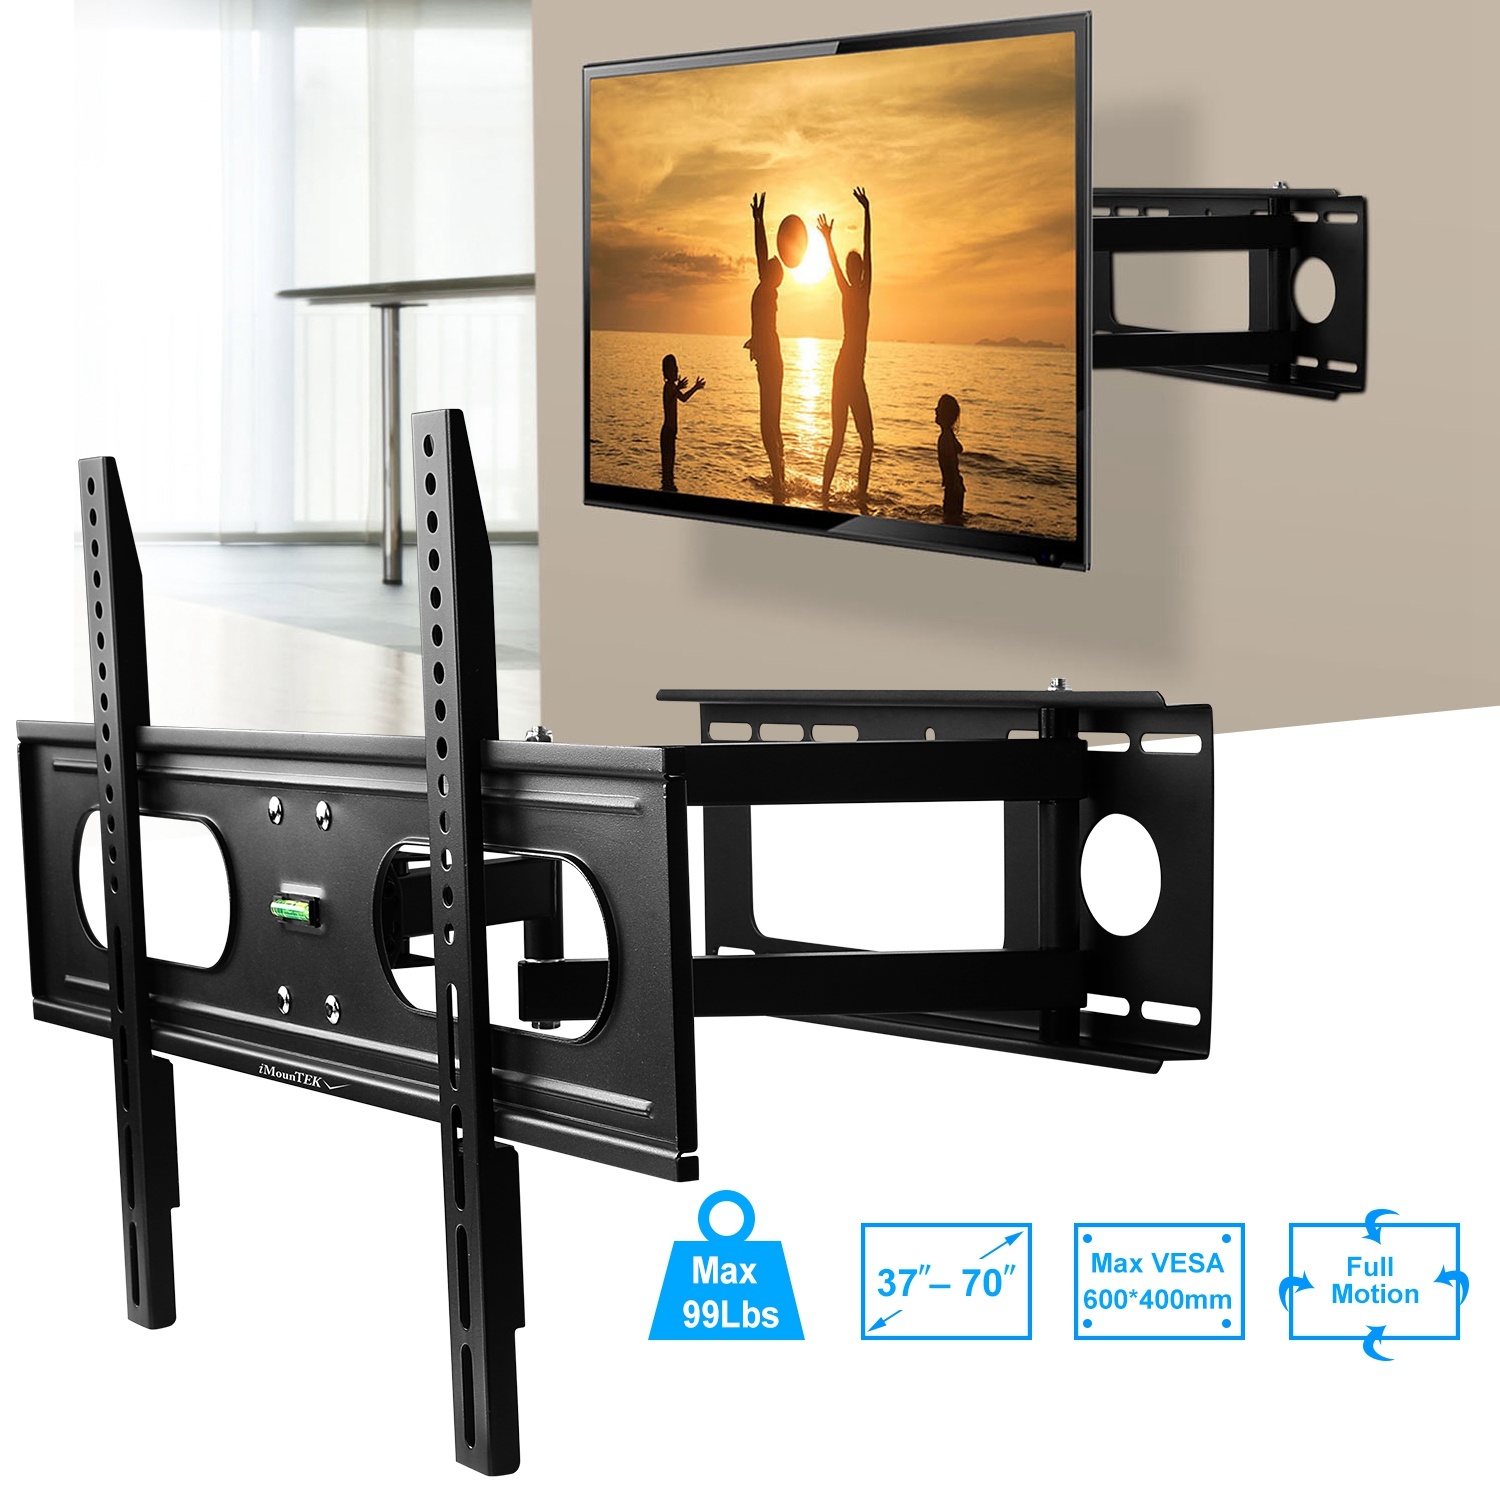 Full Motion TV Wall Mount Swivel Tilt TV Wall Rack Support 37-70' TV Wall Mount Max VESA Up To 600x4